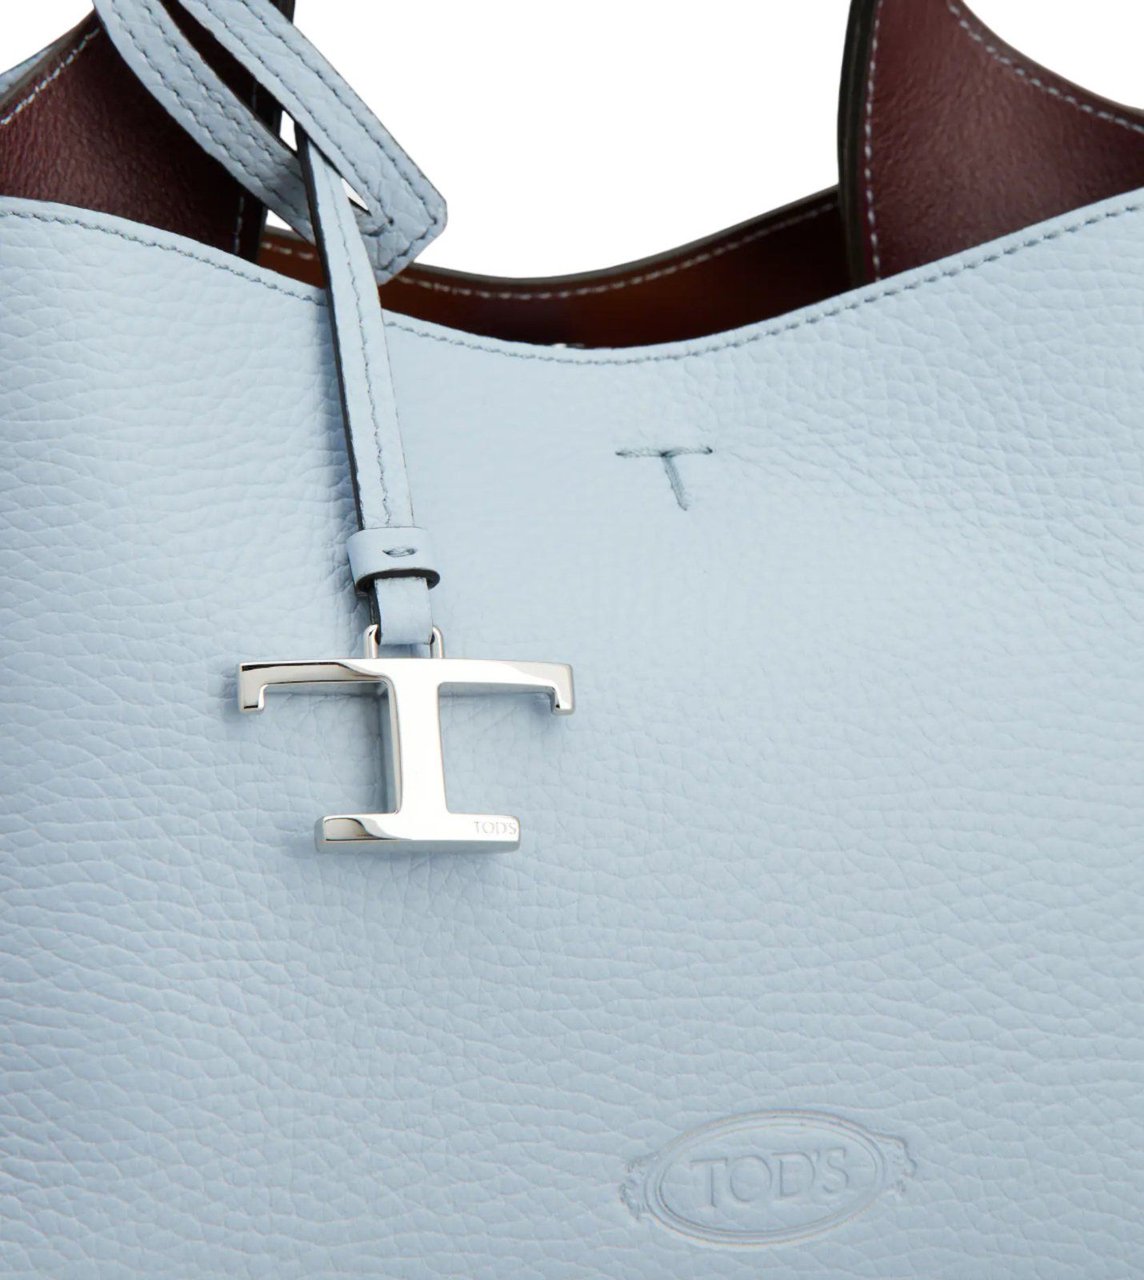 Tod's Micro Handbag Blauw